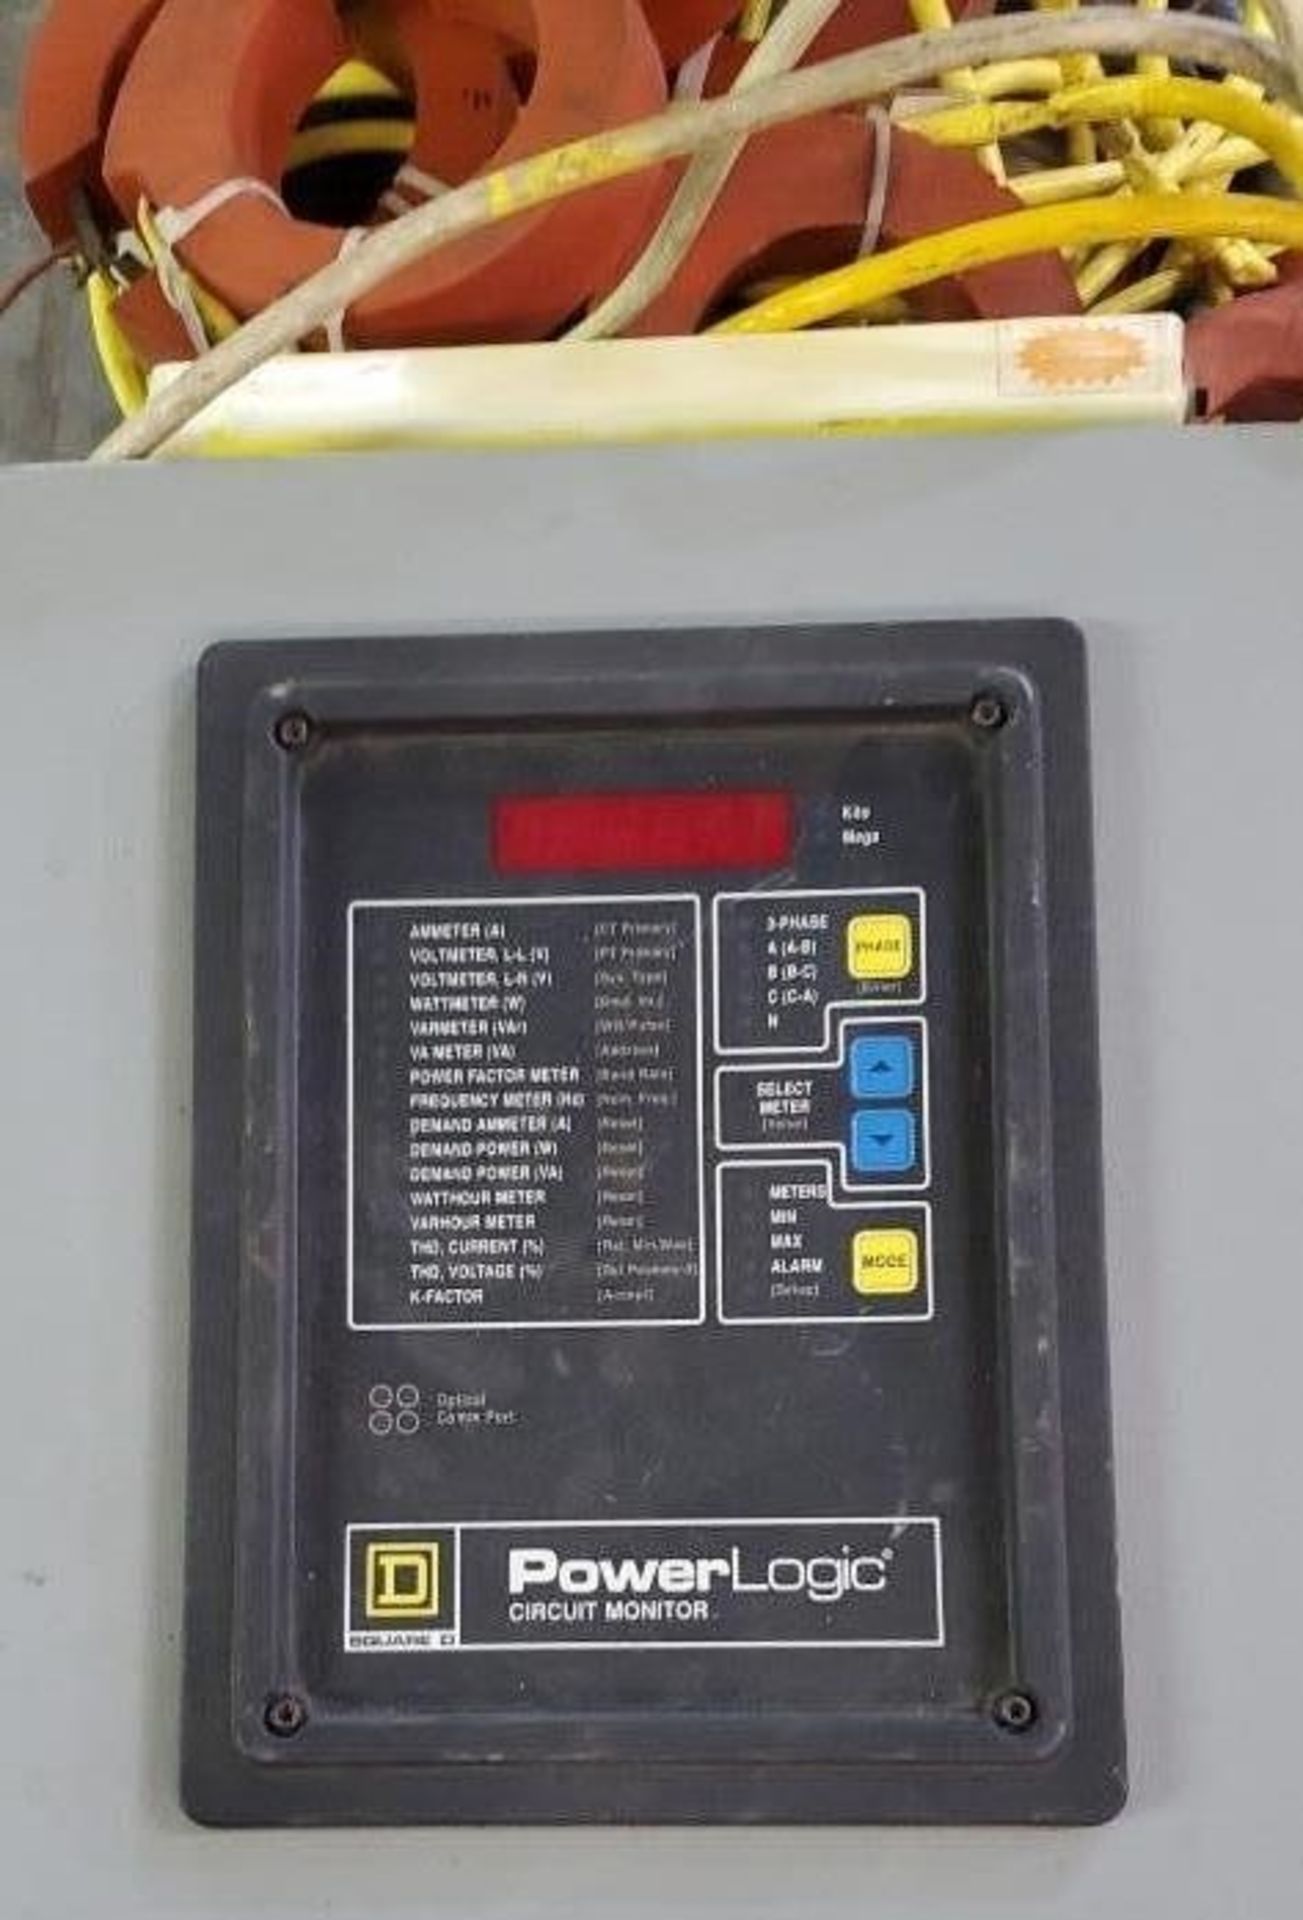 Square D Power Logic Circuit Monitor